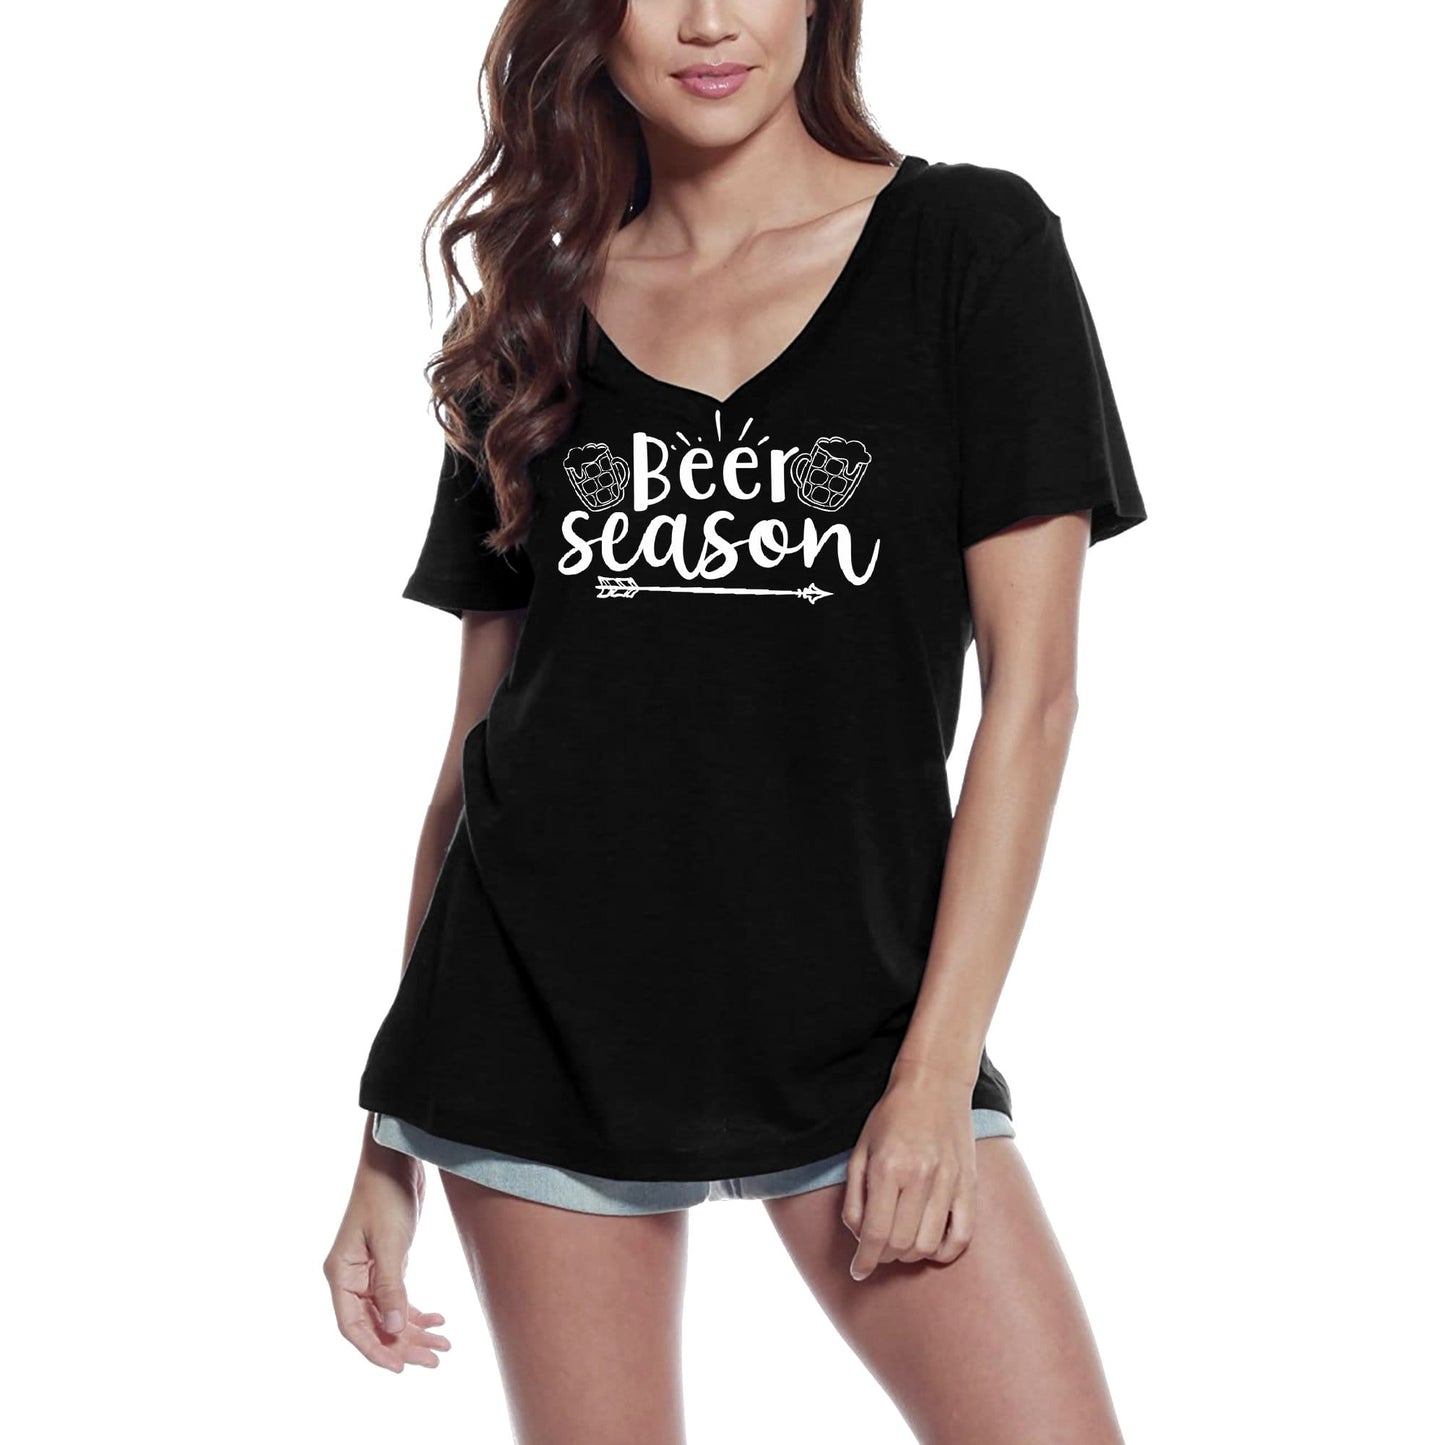 ULTRABASIC Women's T-Shirt Beer Season - Funny Short Sleeve Tee Shirt